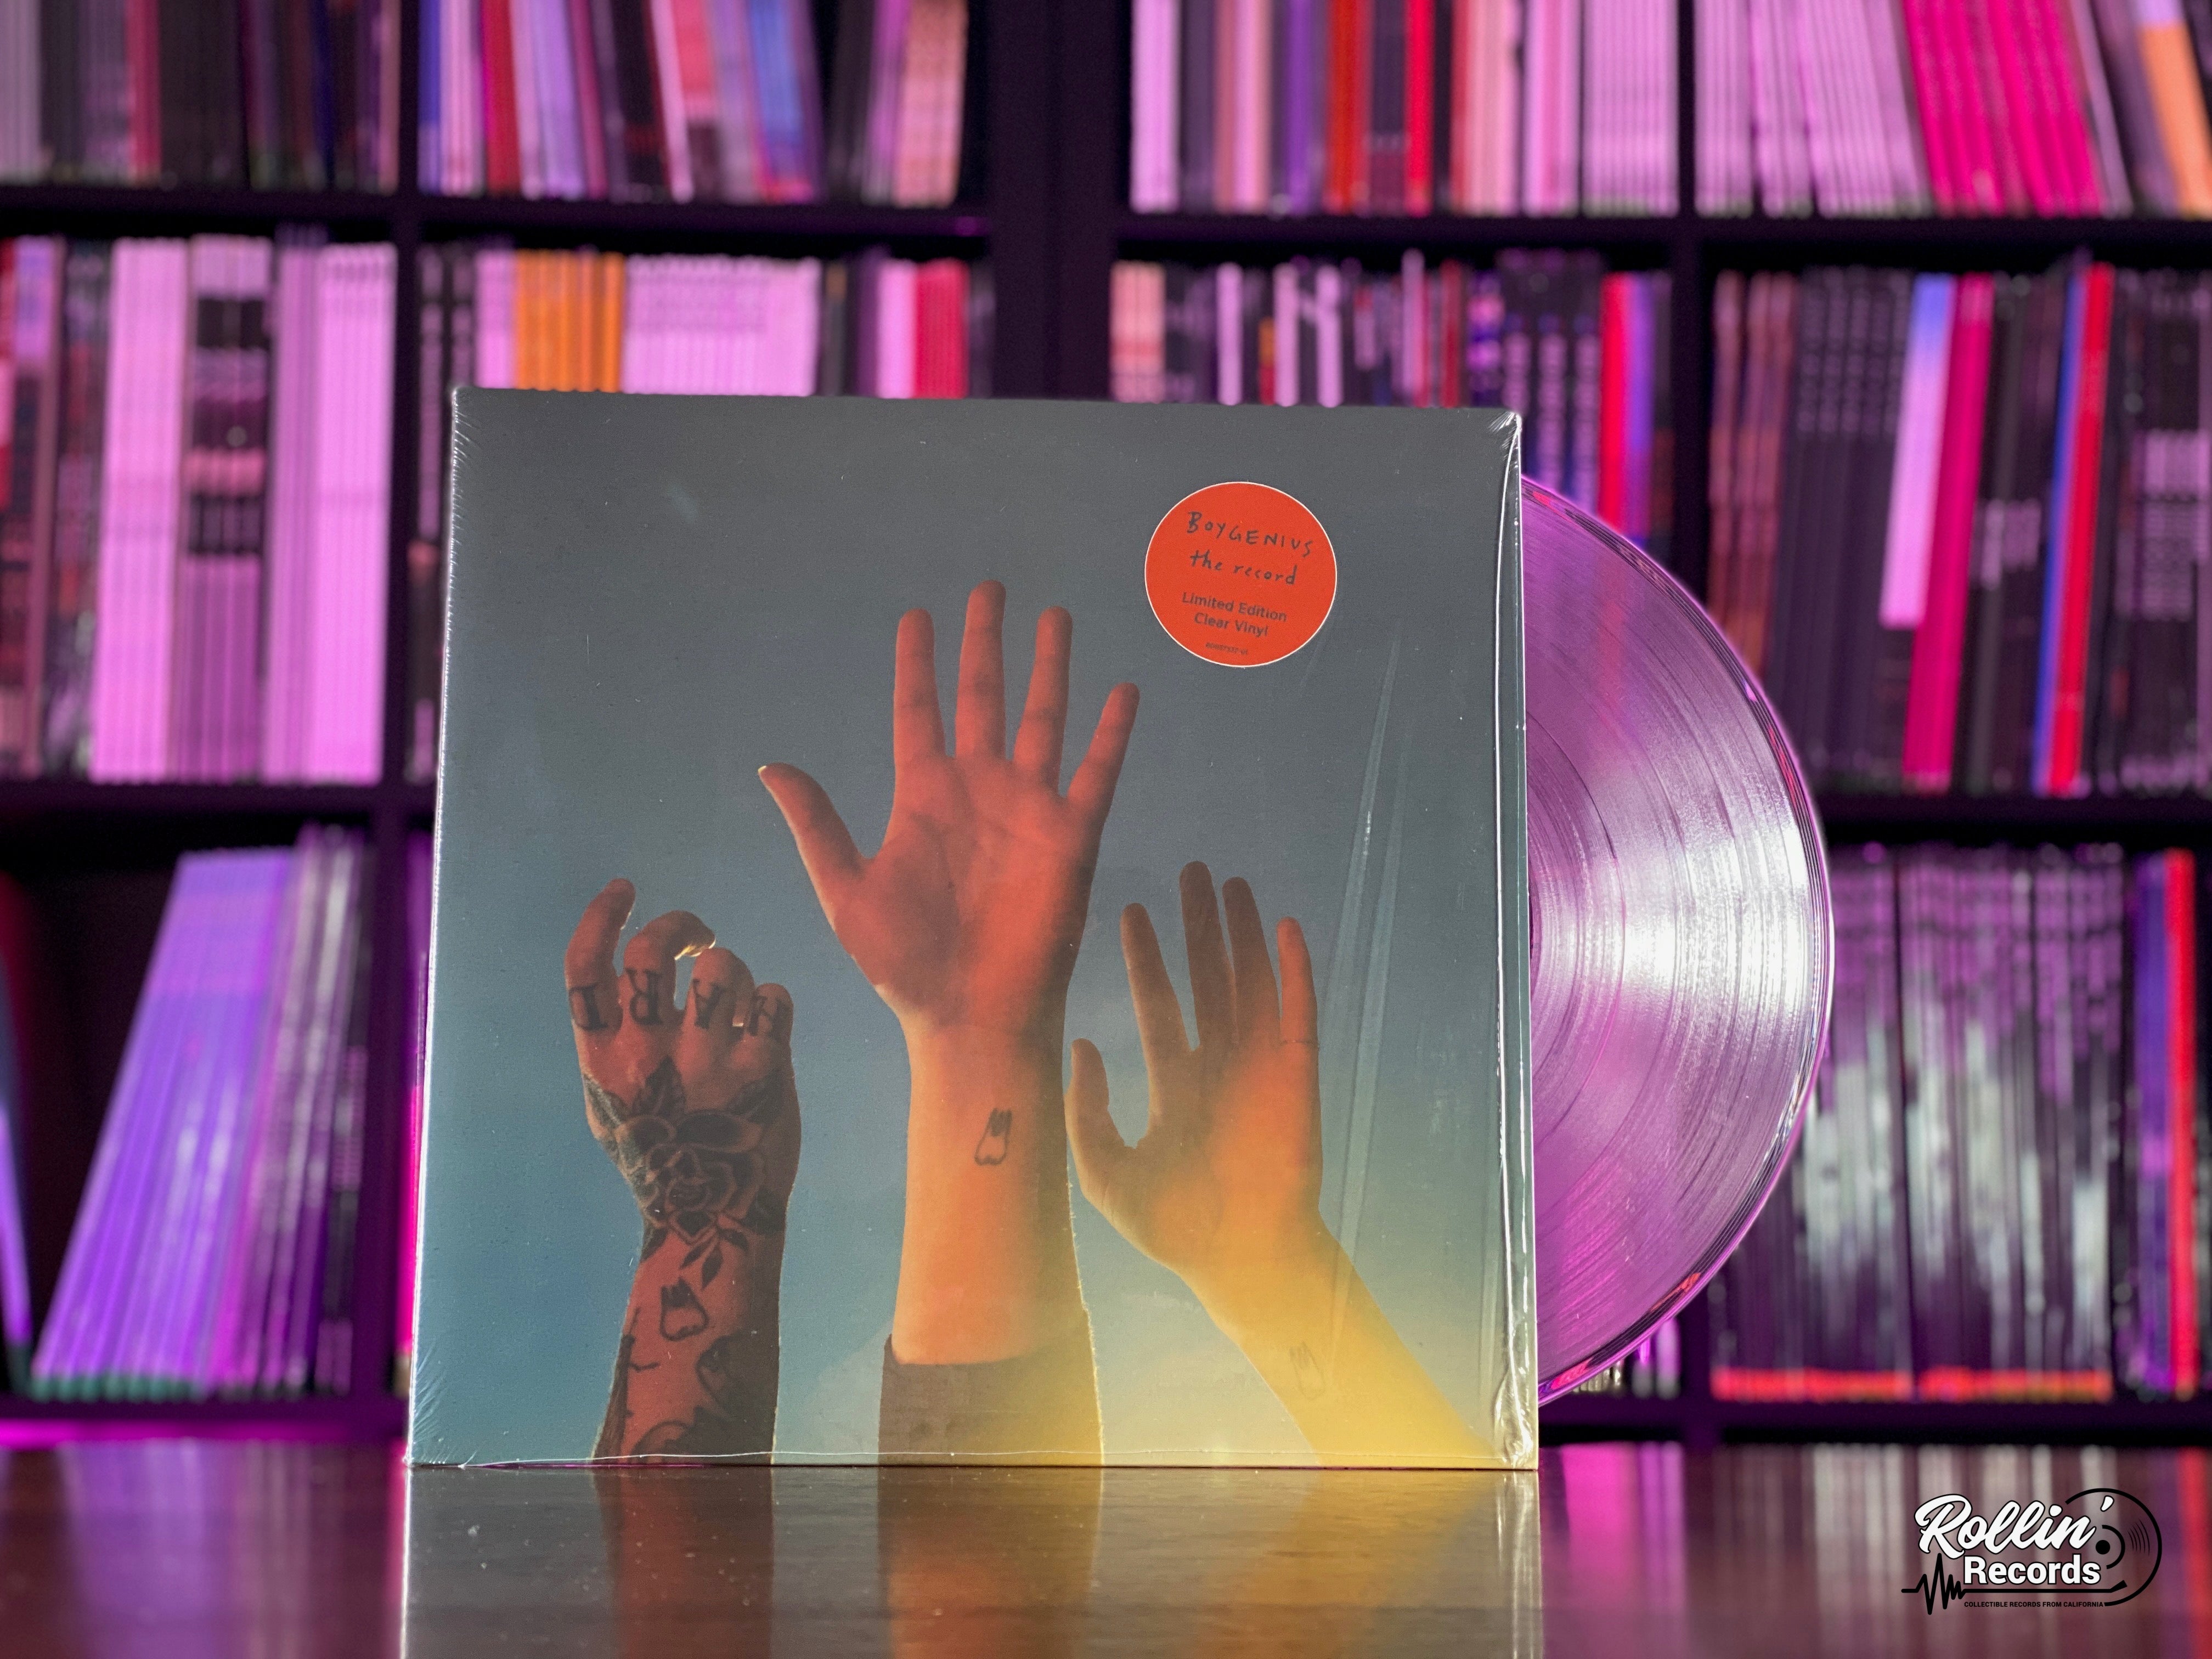 boygenius - The Record (Indie Exclusive Clear Vinyl)